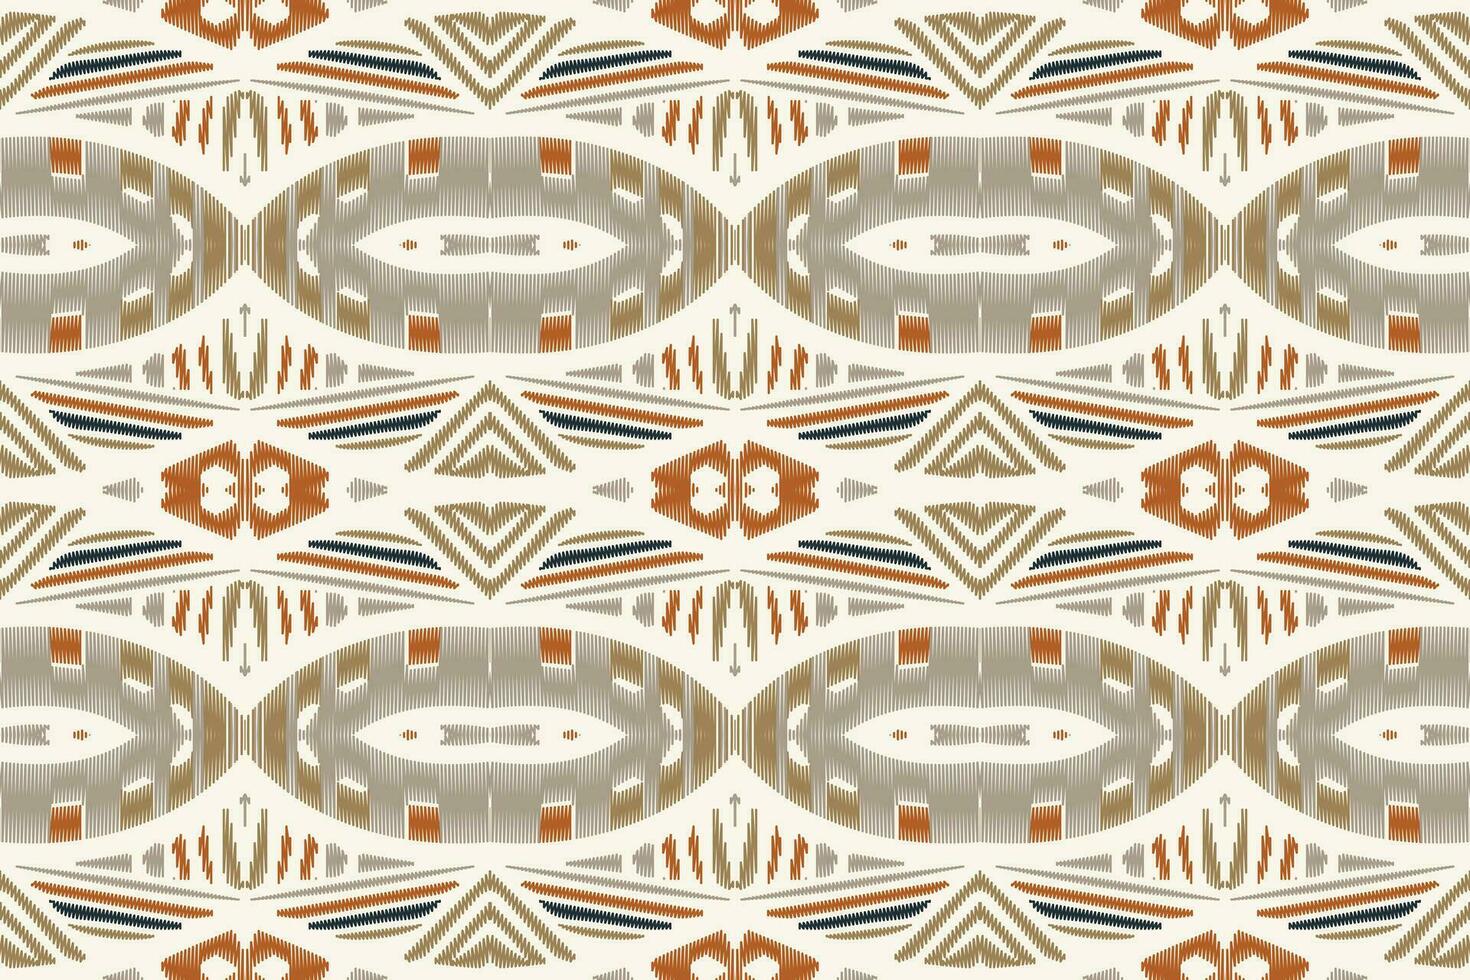 ikat damasco cachemir bordado antecedentes. ikat damasco geométrico étnico oriental modelo tradicional. ikat azteca estilo resumen diseño para impresión textura,tela,sari,sari,alfombra. vector